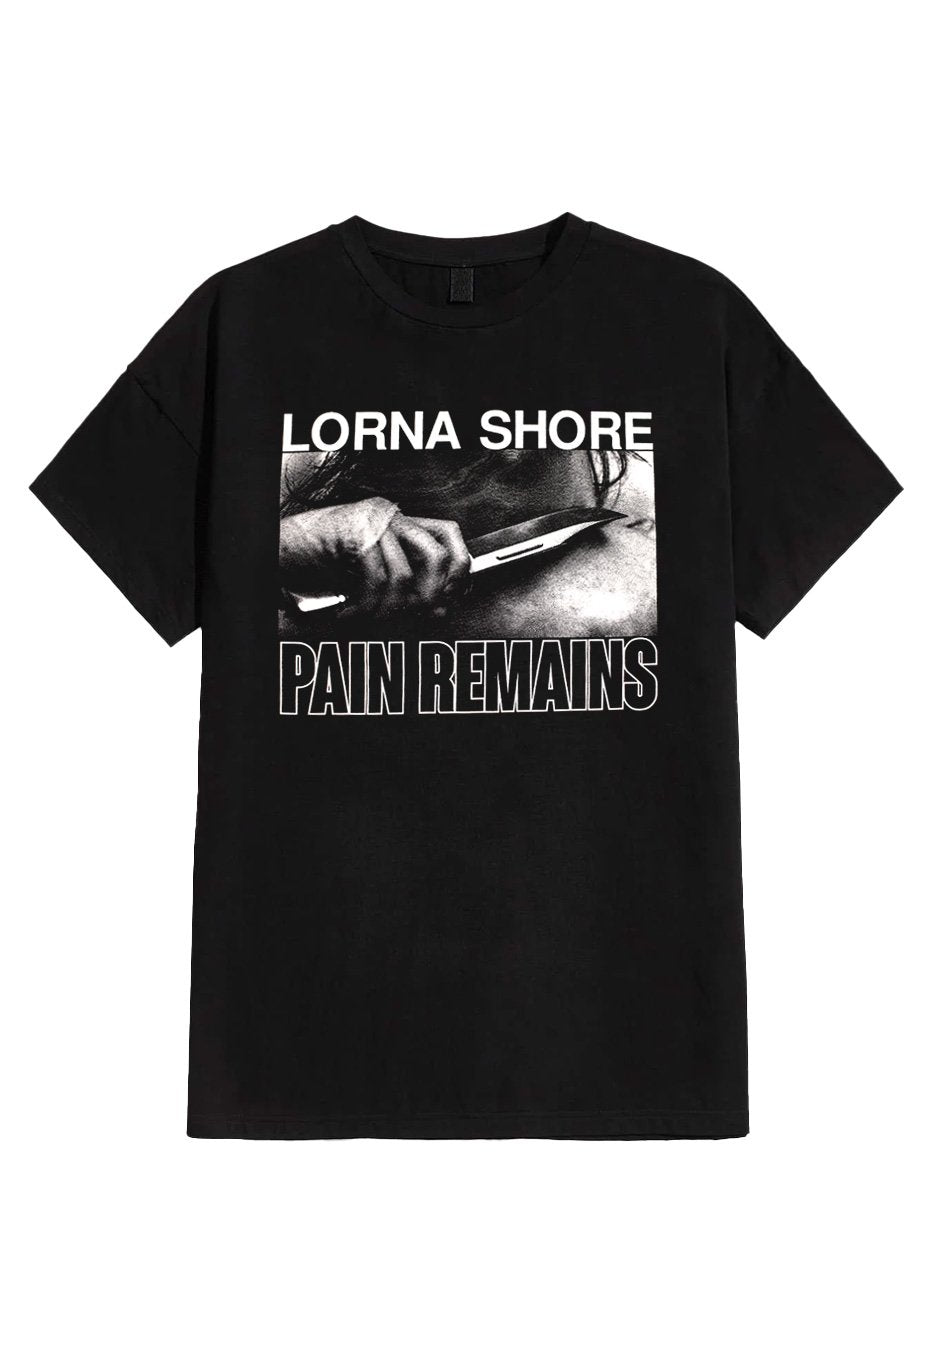 Lorna Shore - Pain Remains Cover - T-Shirt